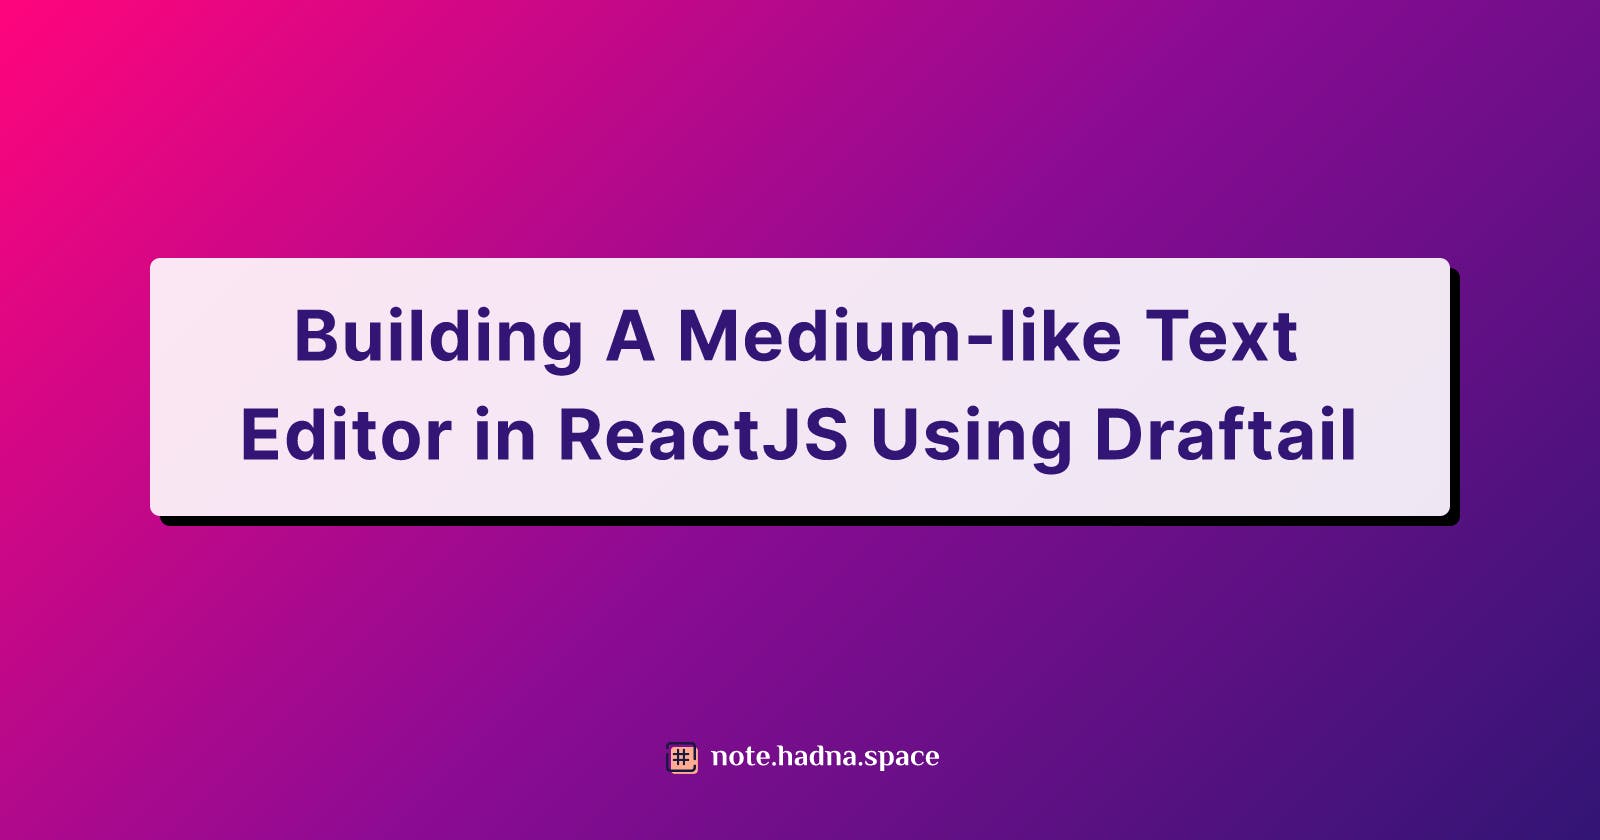 Building A Medium-like Text Editor in ReactJS Using Draftail